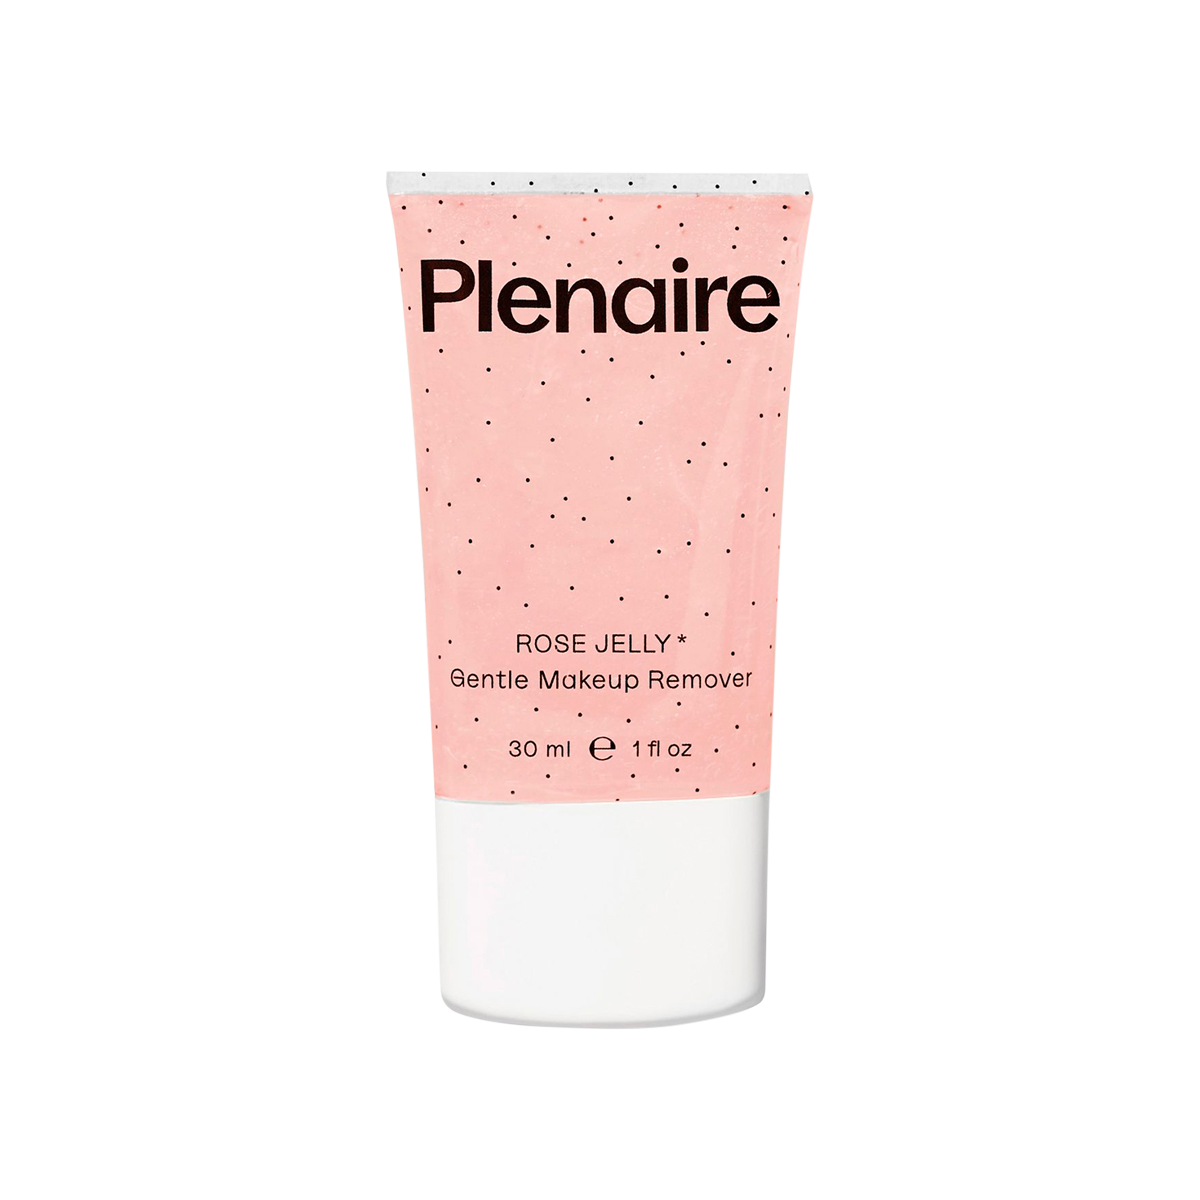 Plenaire - Rose Jelly* Gentle Makeup Remover Travel